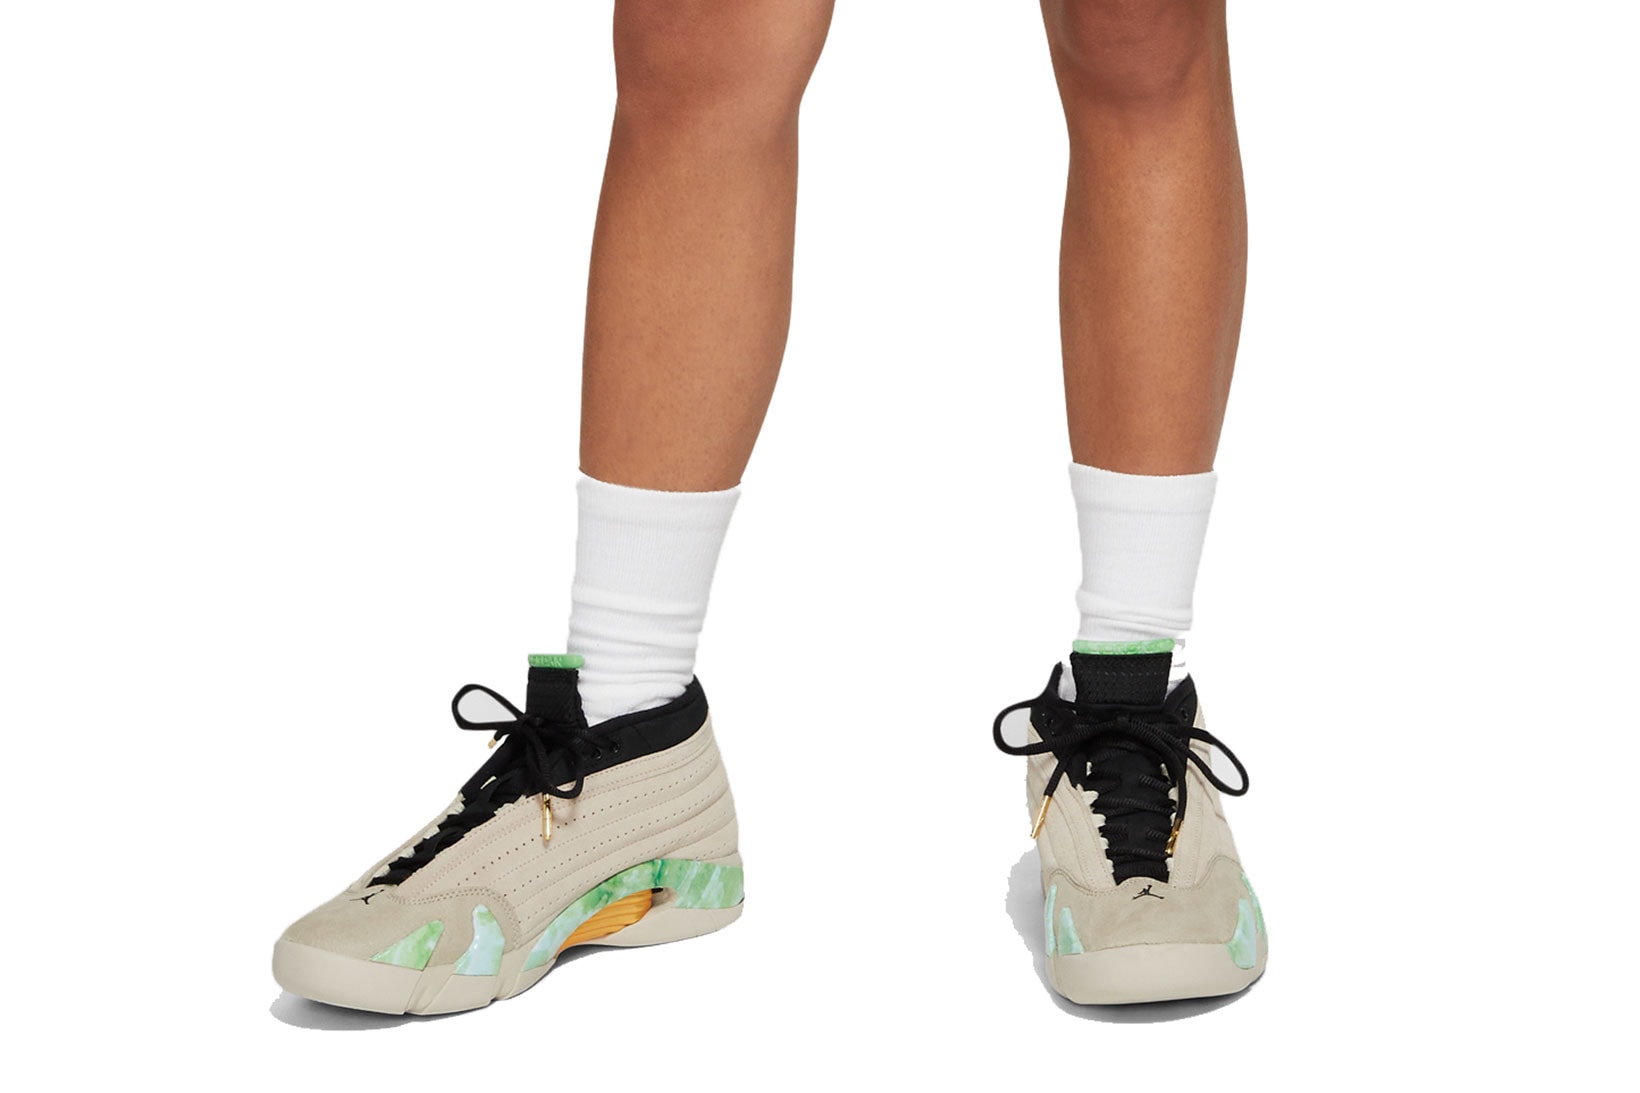 Aleali May Air Jordan 14 AJ14 Collaboration On foot Socks Sneakers